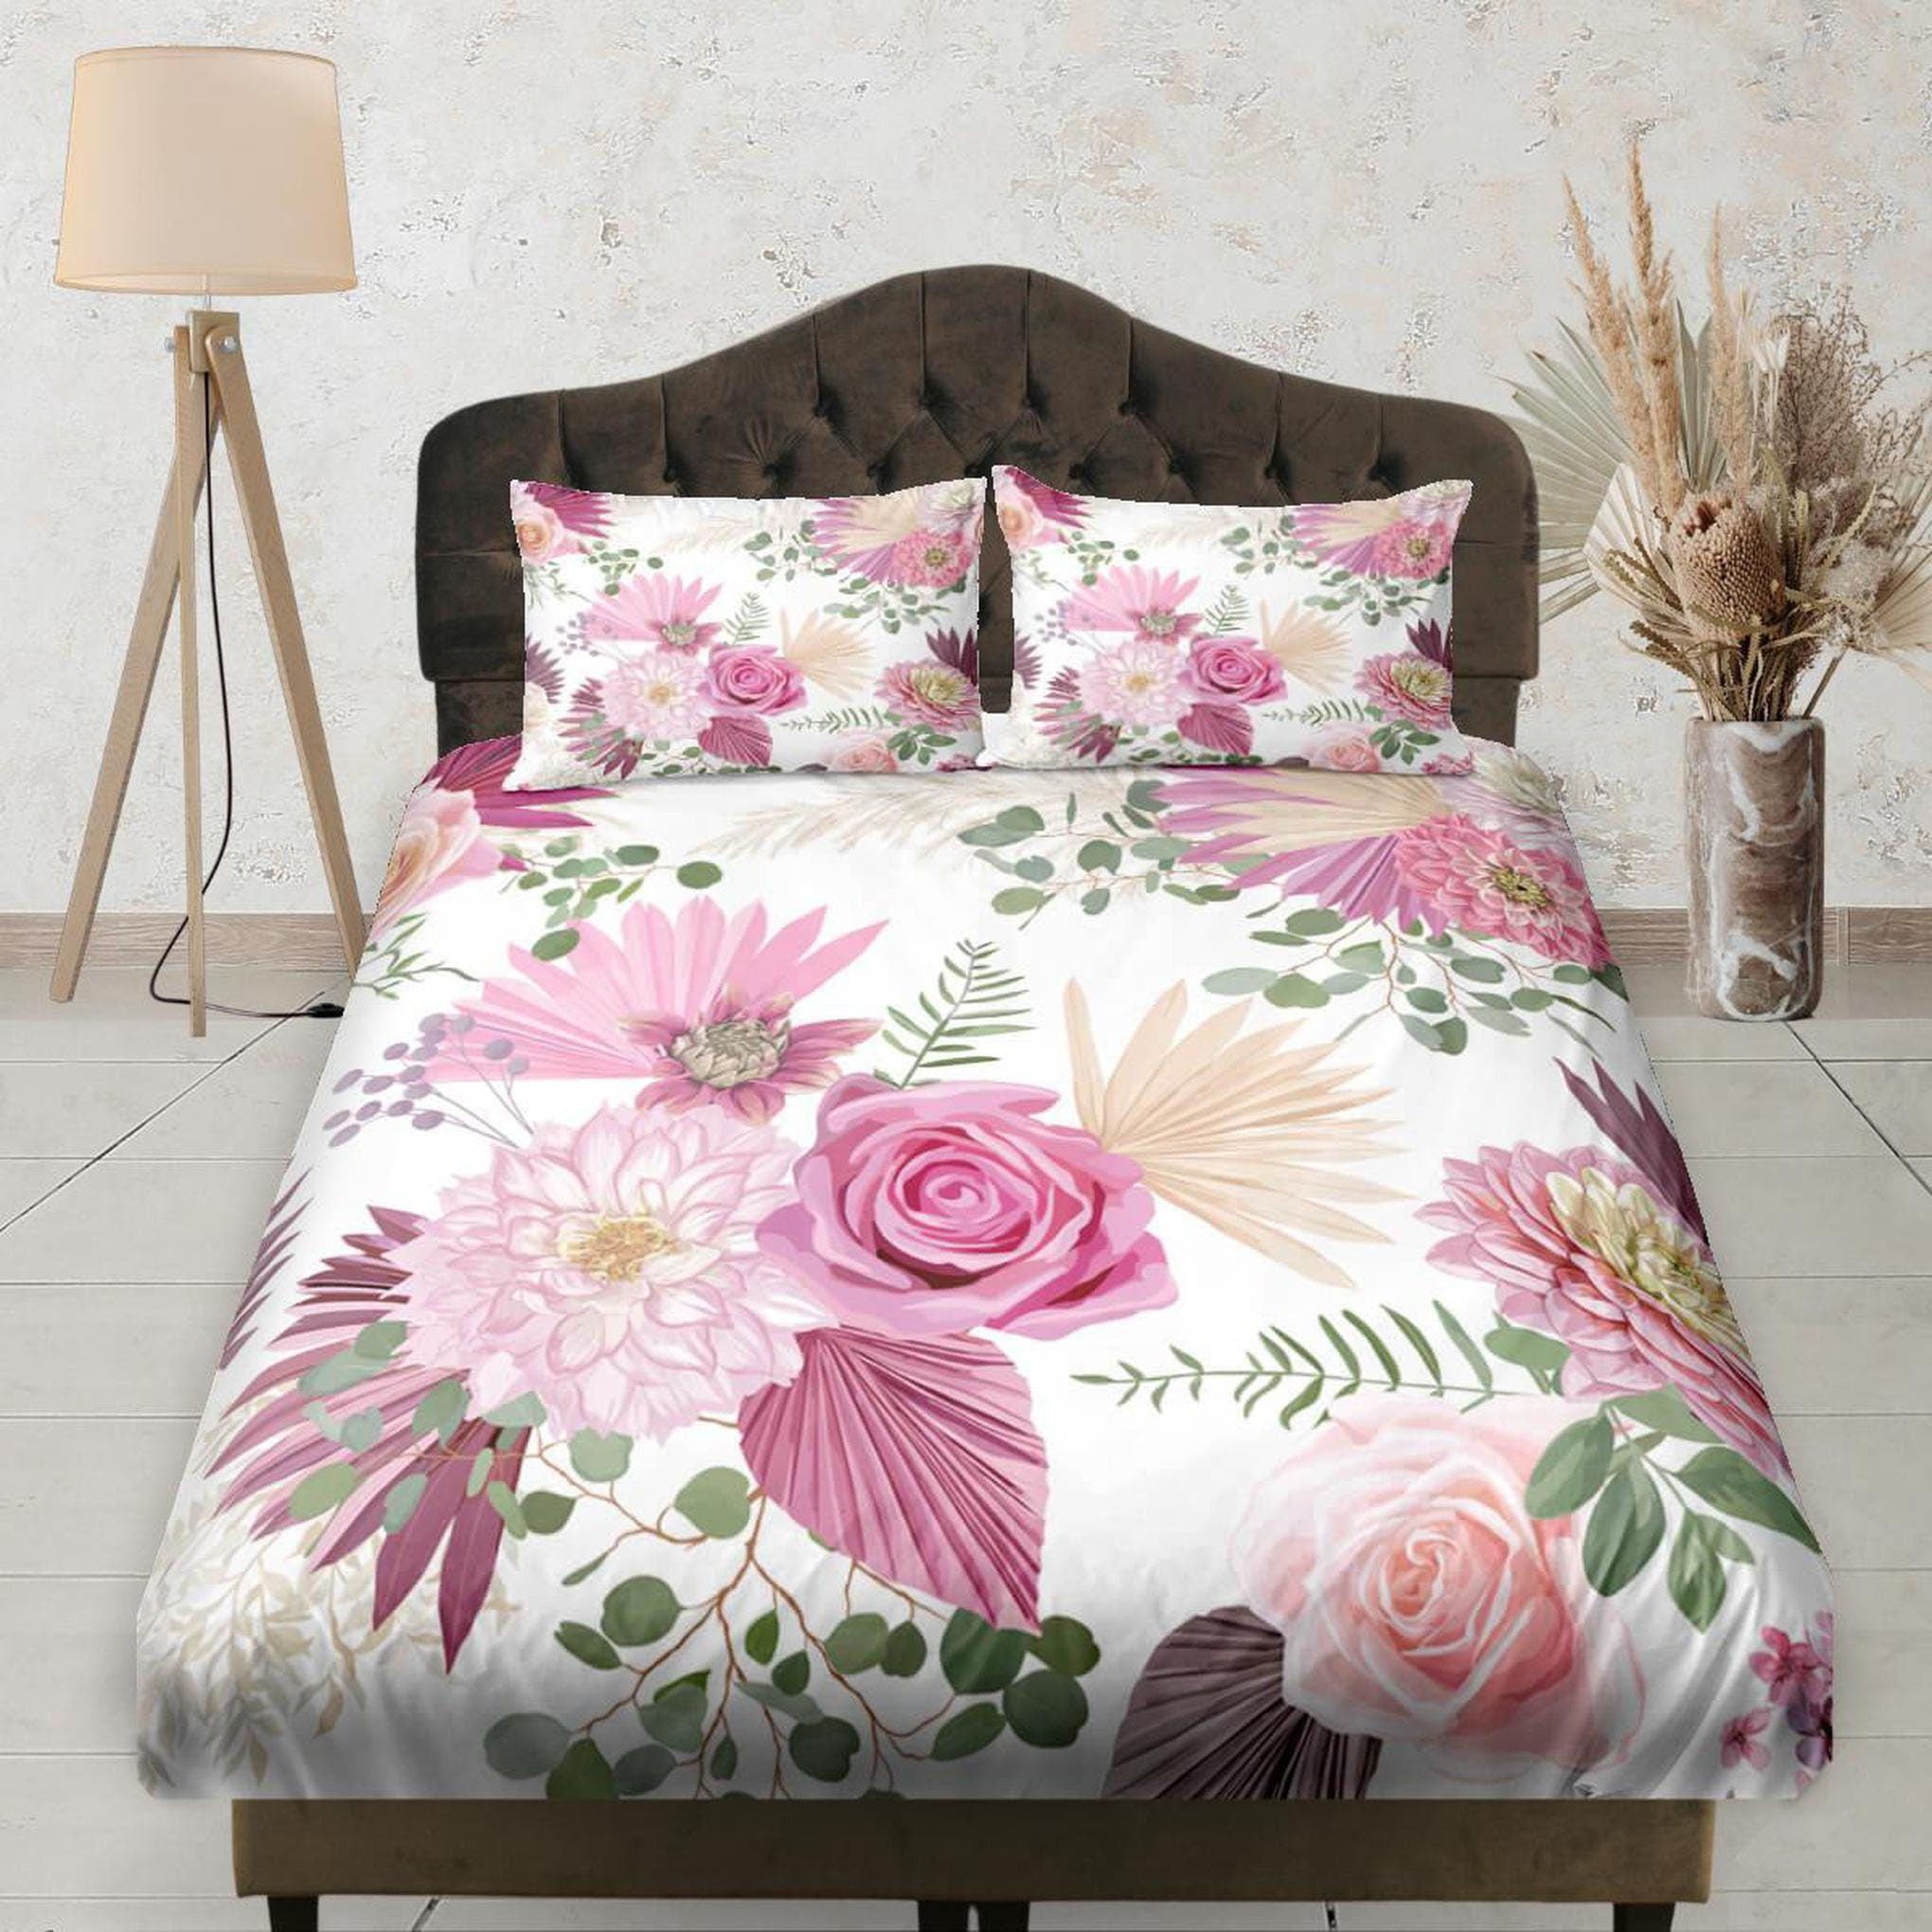 daintyduvet Pink Flowers Fitted Bedsheet, Deep Pocket, Floral Prints, Aesthetic Boho Bedding Set Full, Dorm Bedding, Crib Sheet, Shabby Chic Bedding